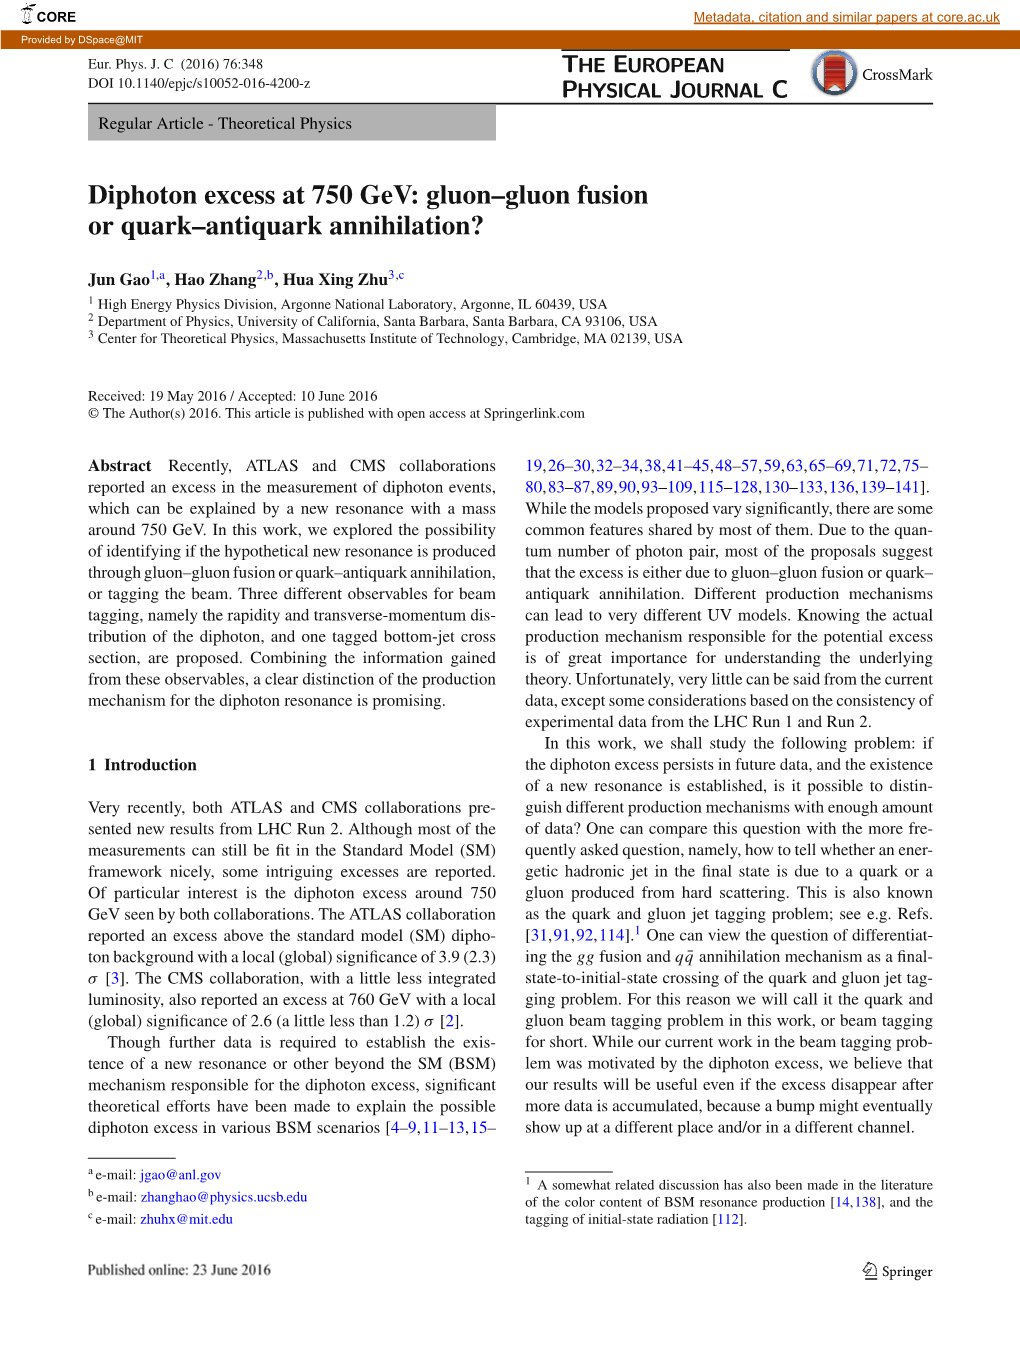 Diphoton Excess at 750 Gev: Gluon–Gluon Fusion Or Quark–Antiquark Annihilation?